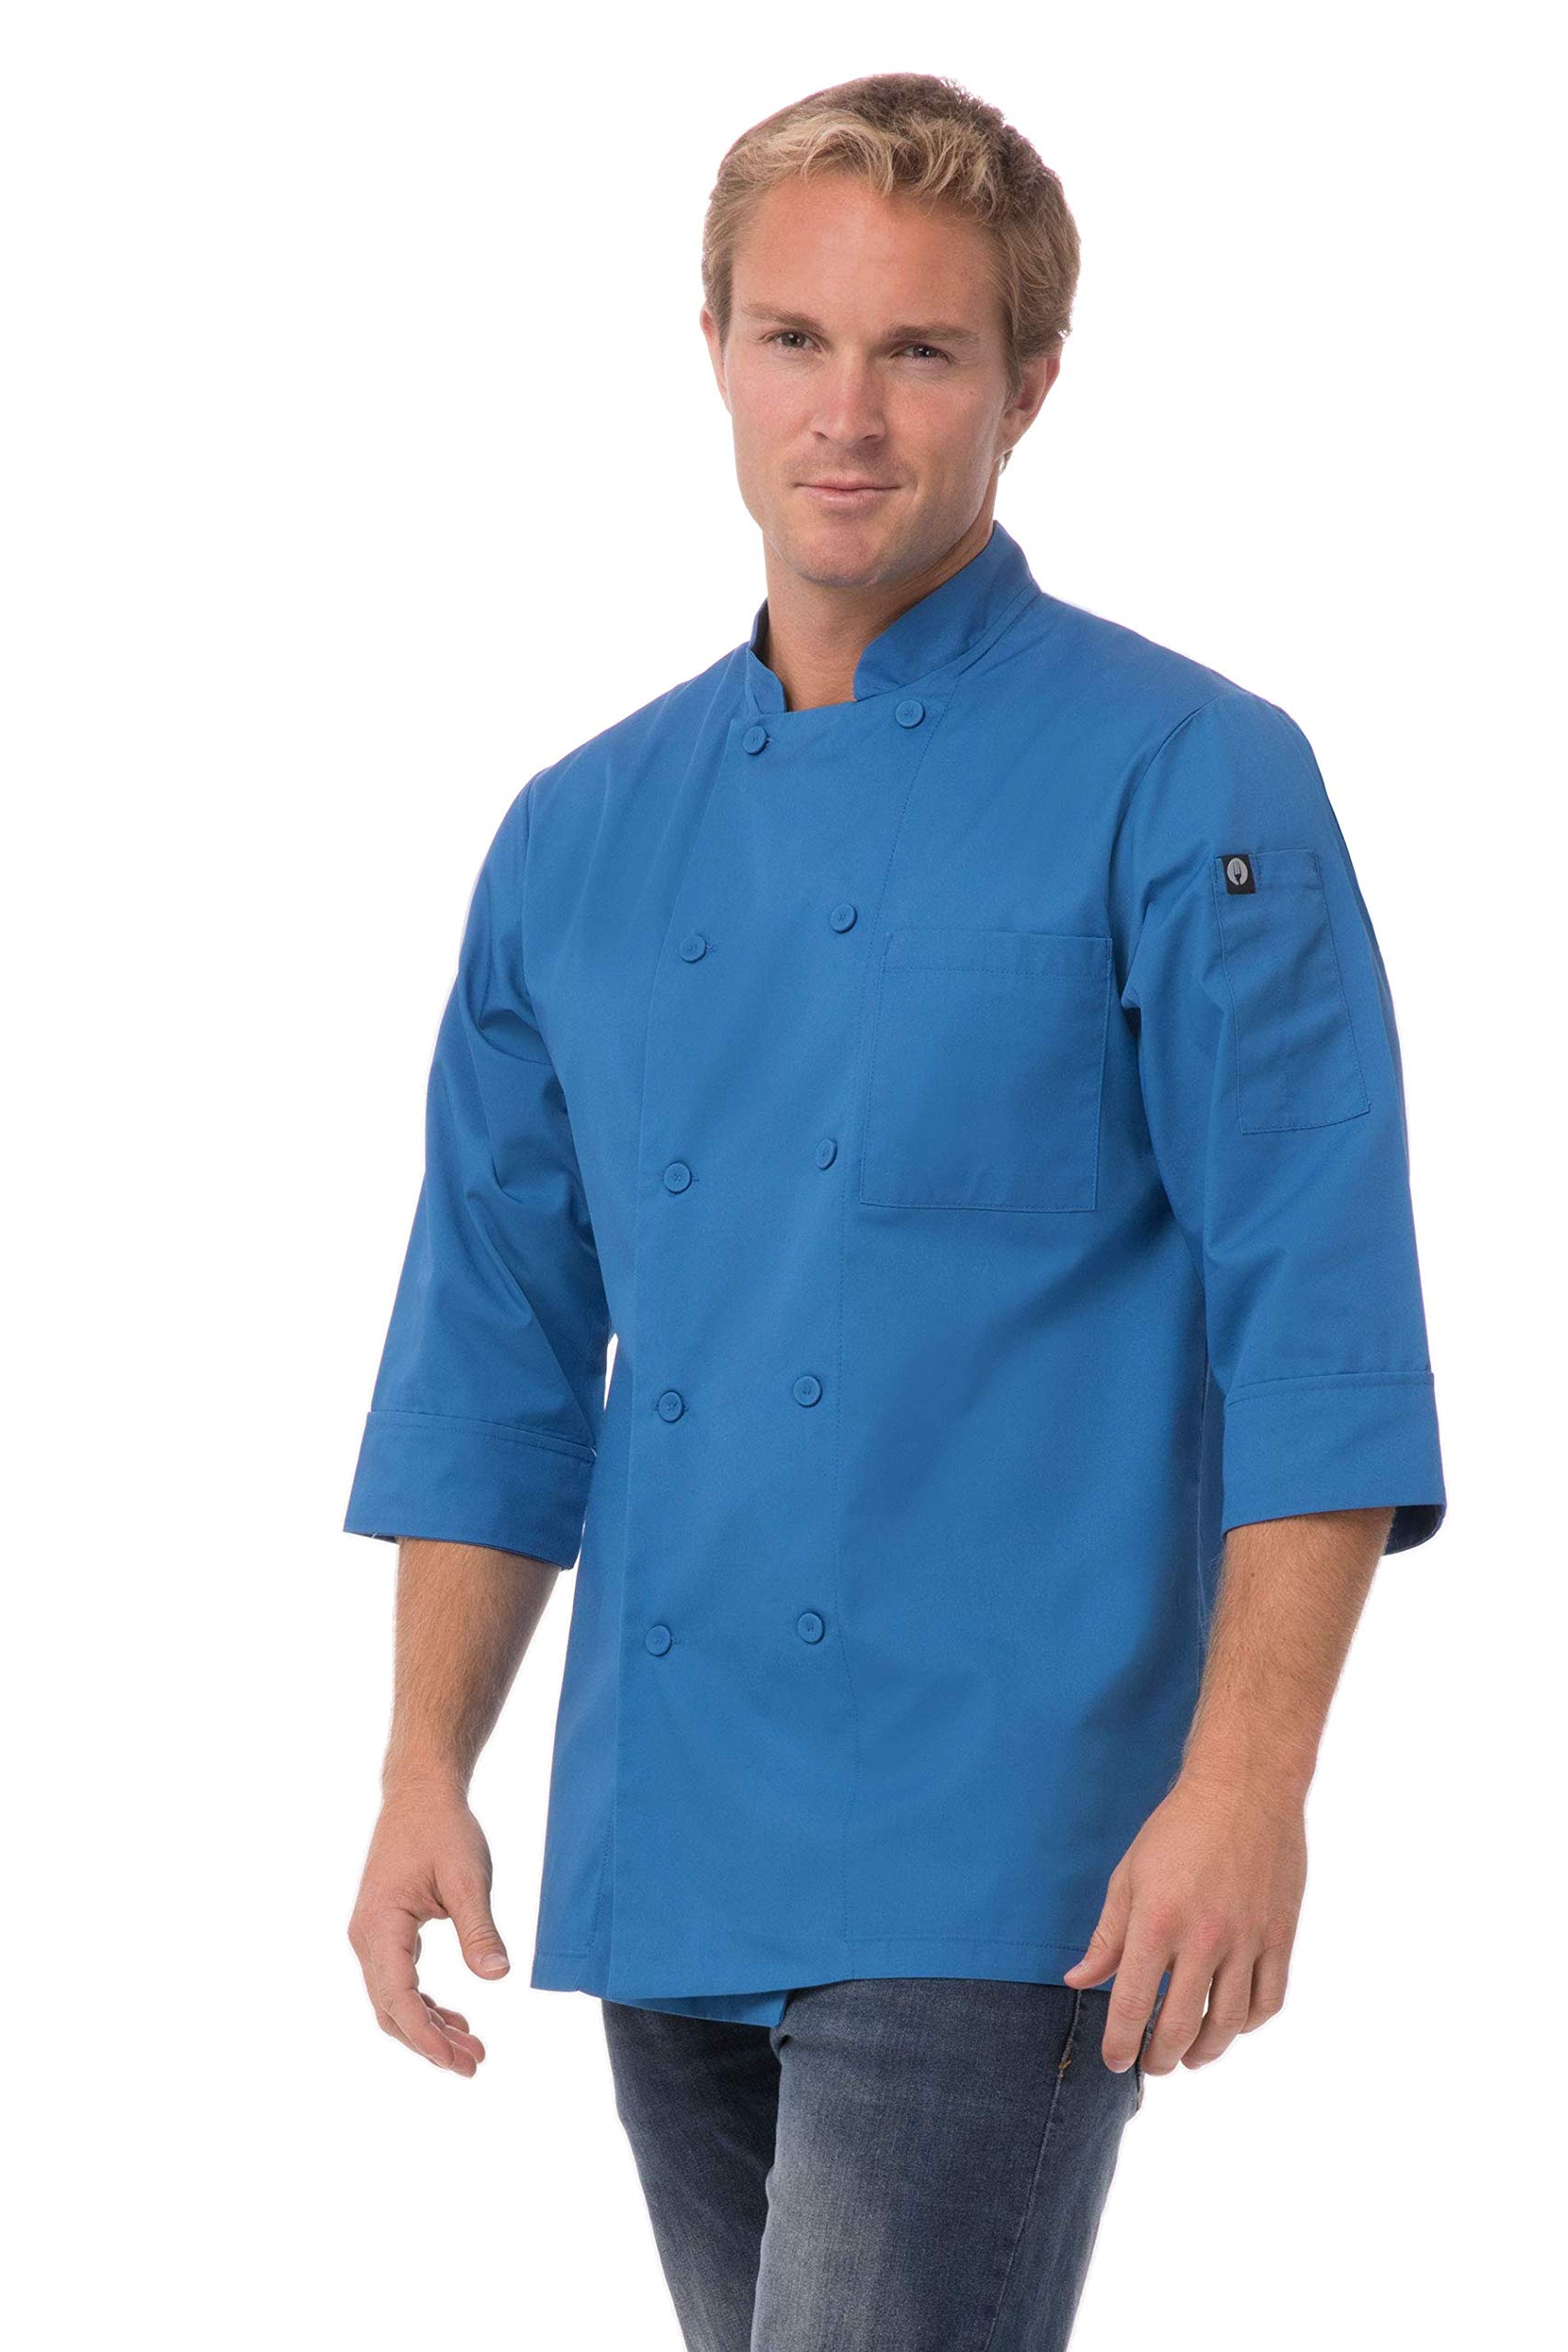 Chef Works Herren Marokko Kochmantel Kochjacke, blau, X-Large